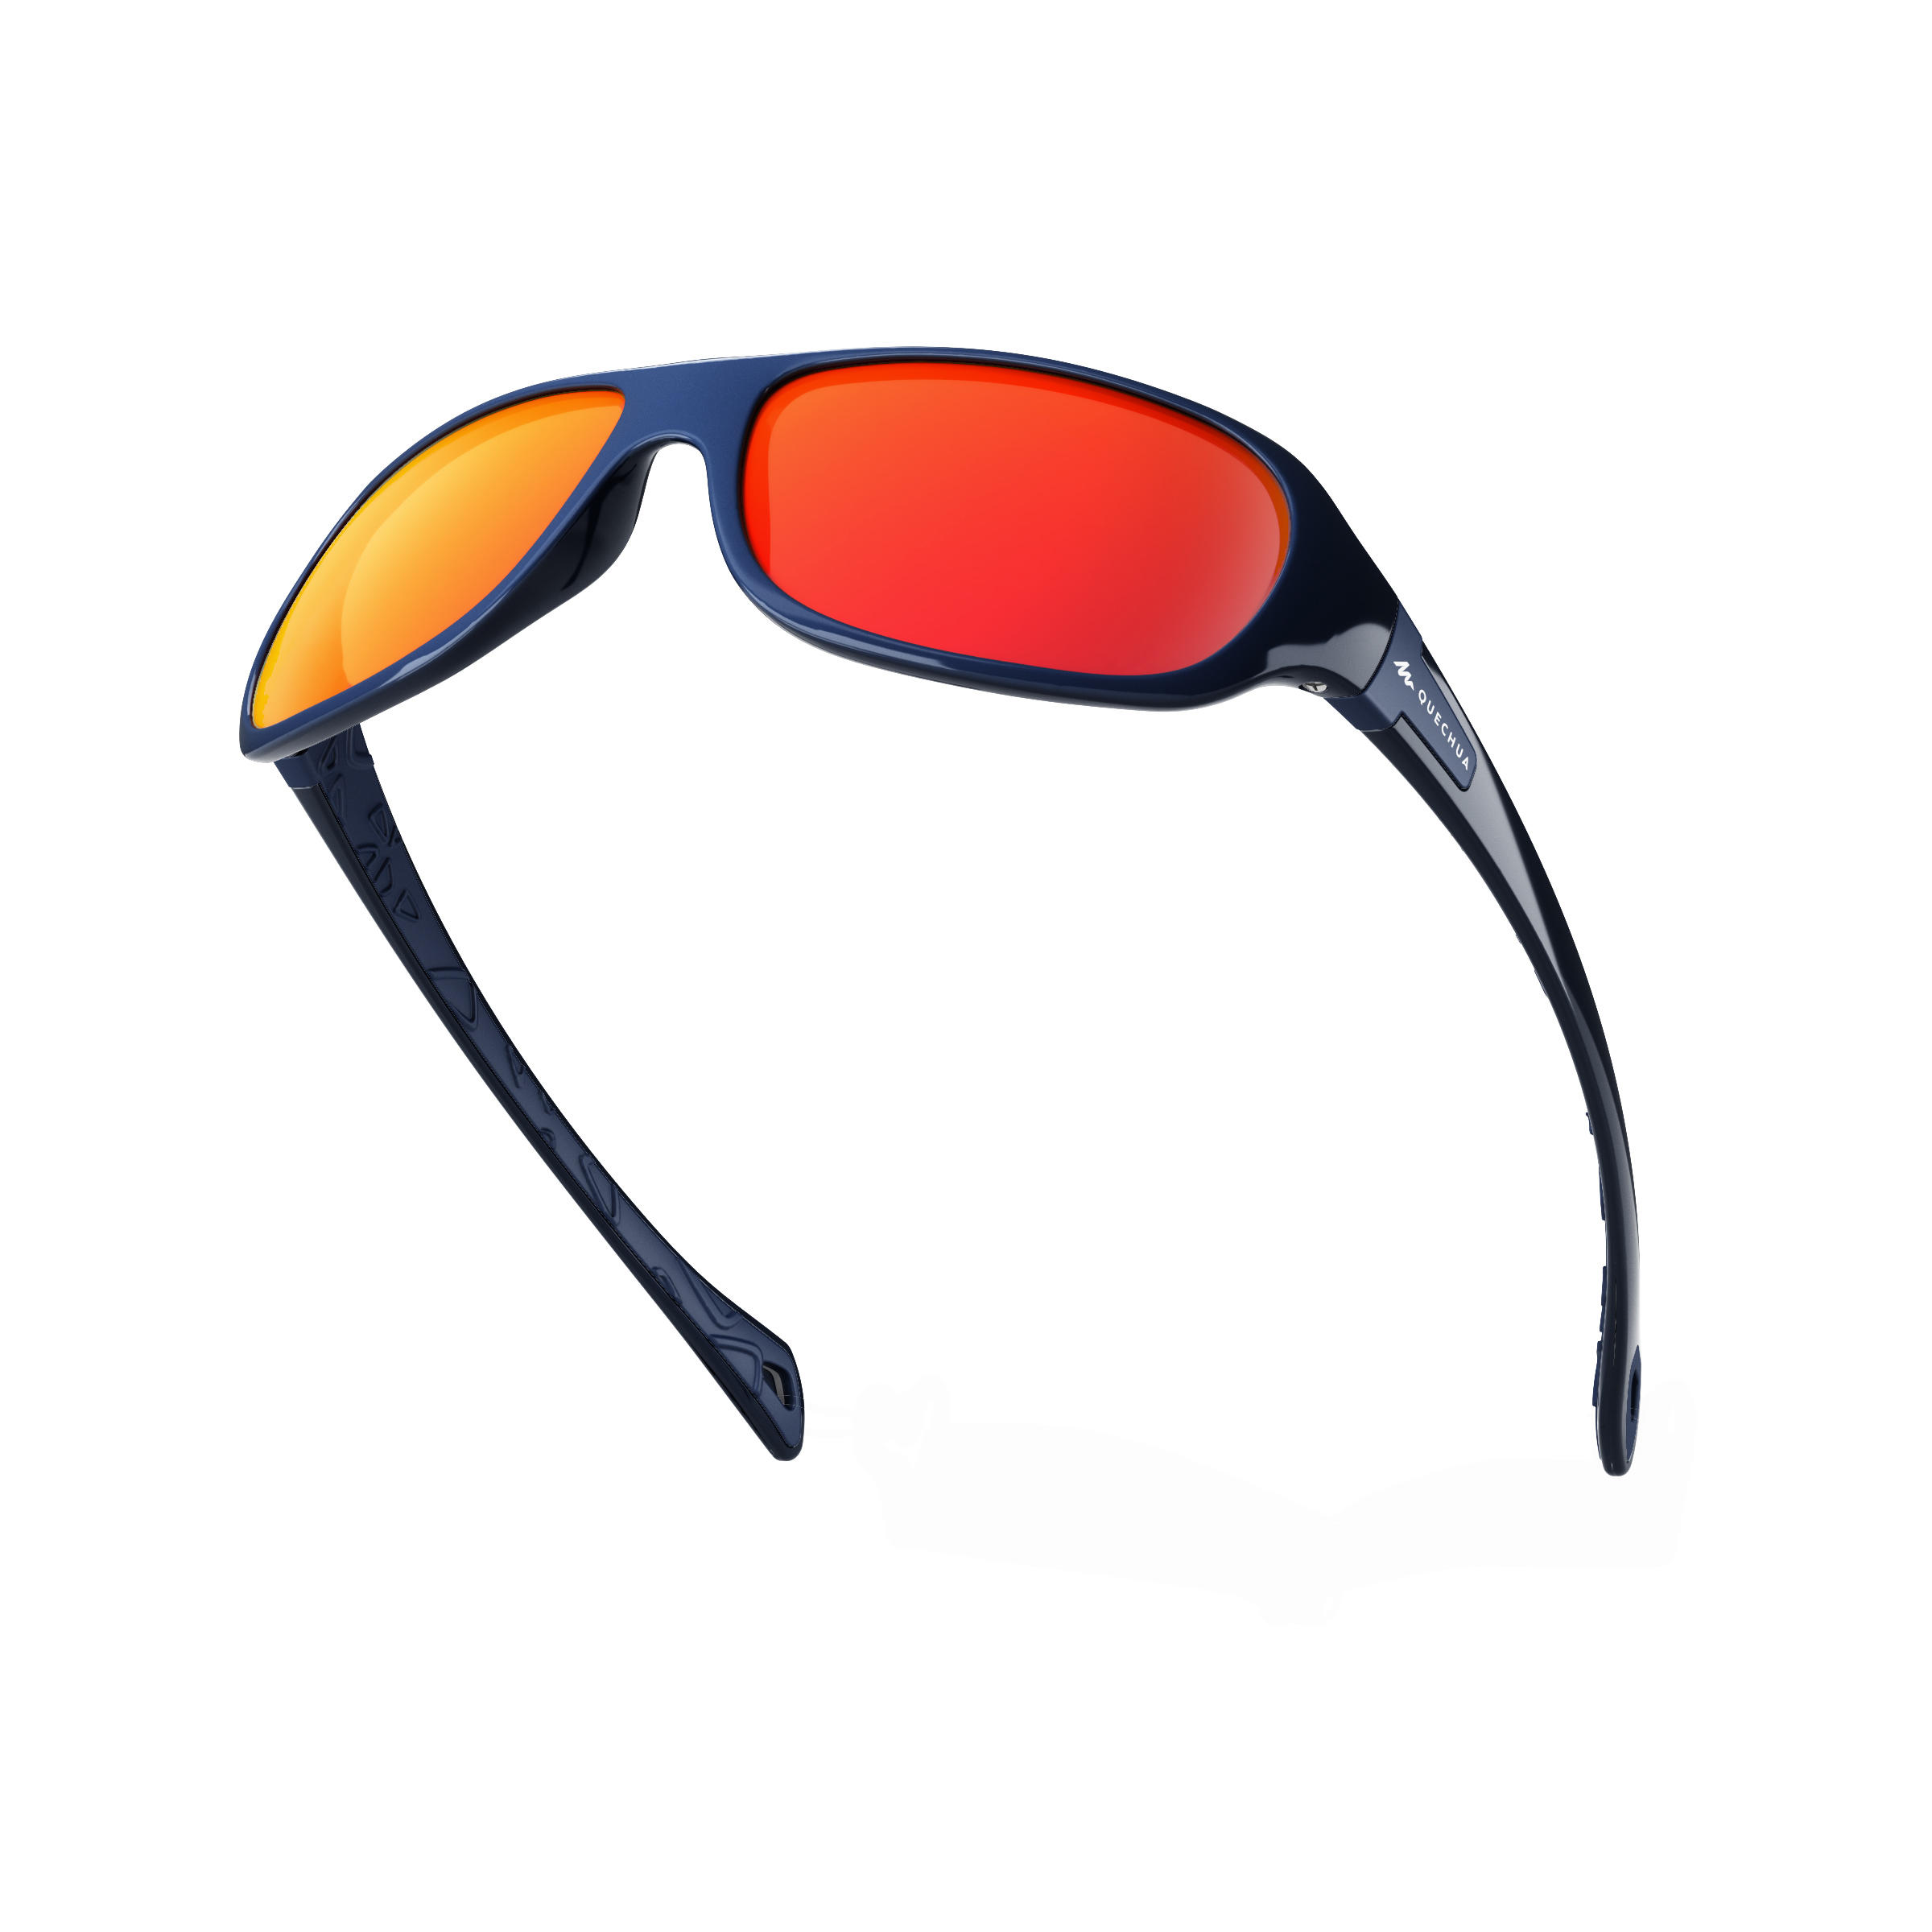 MH T500 category 4 hiking sunglasses - Kids - QUECHUA